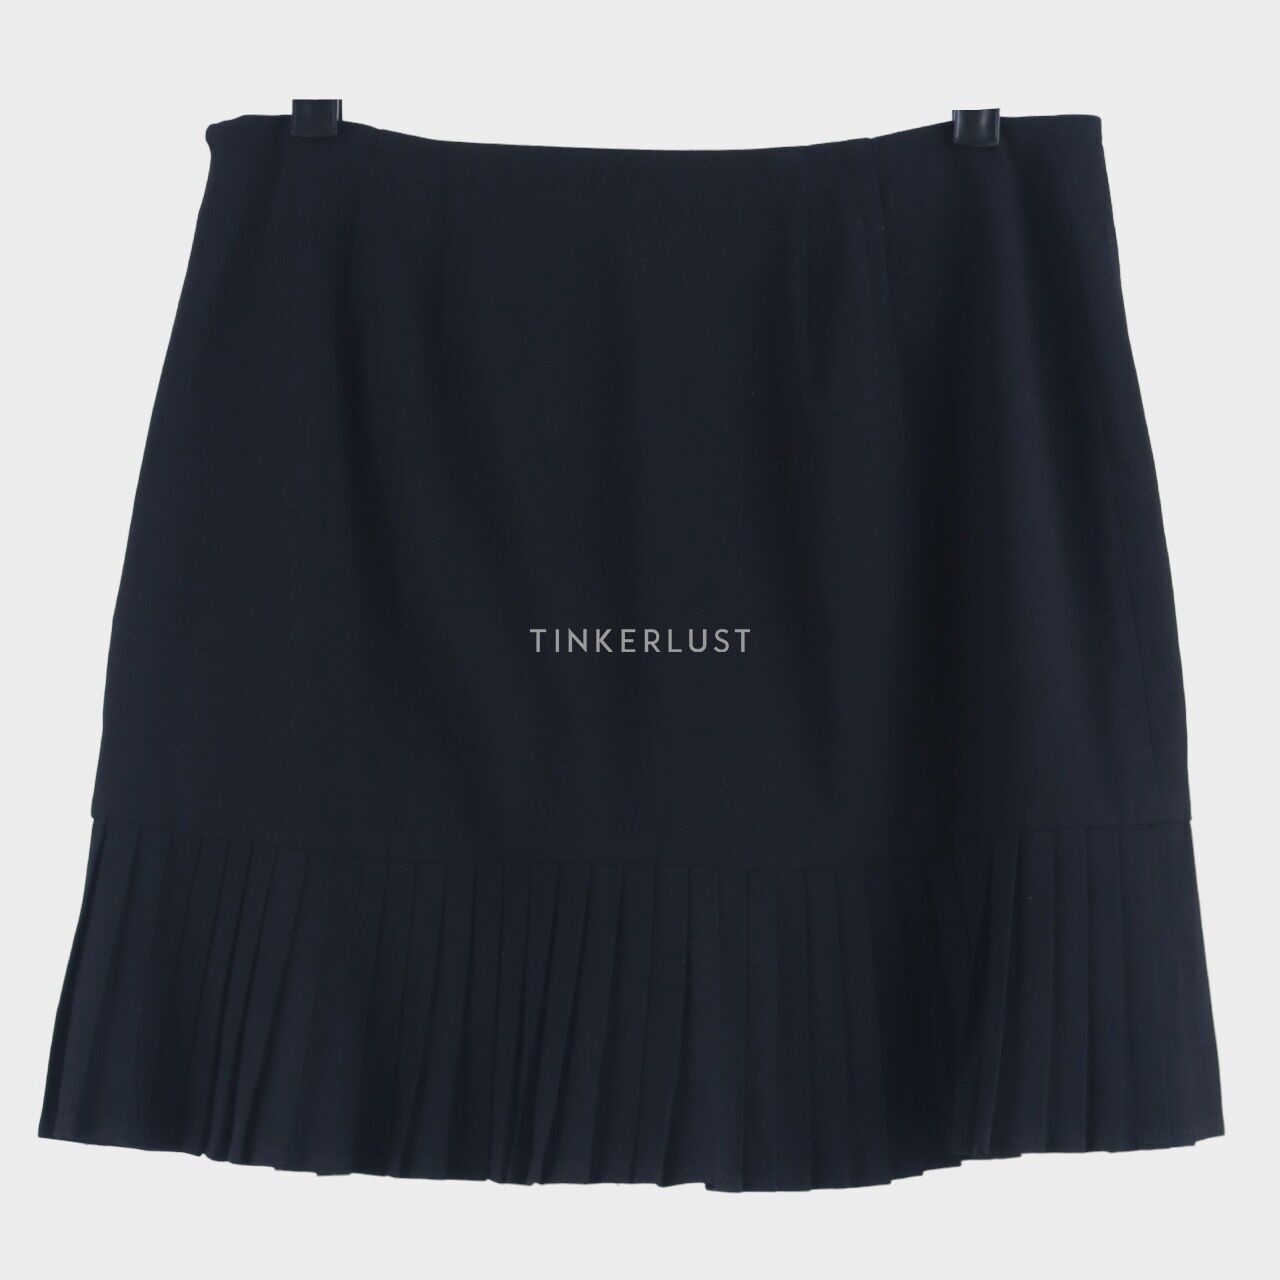 The Limited Black Mini Skirt